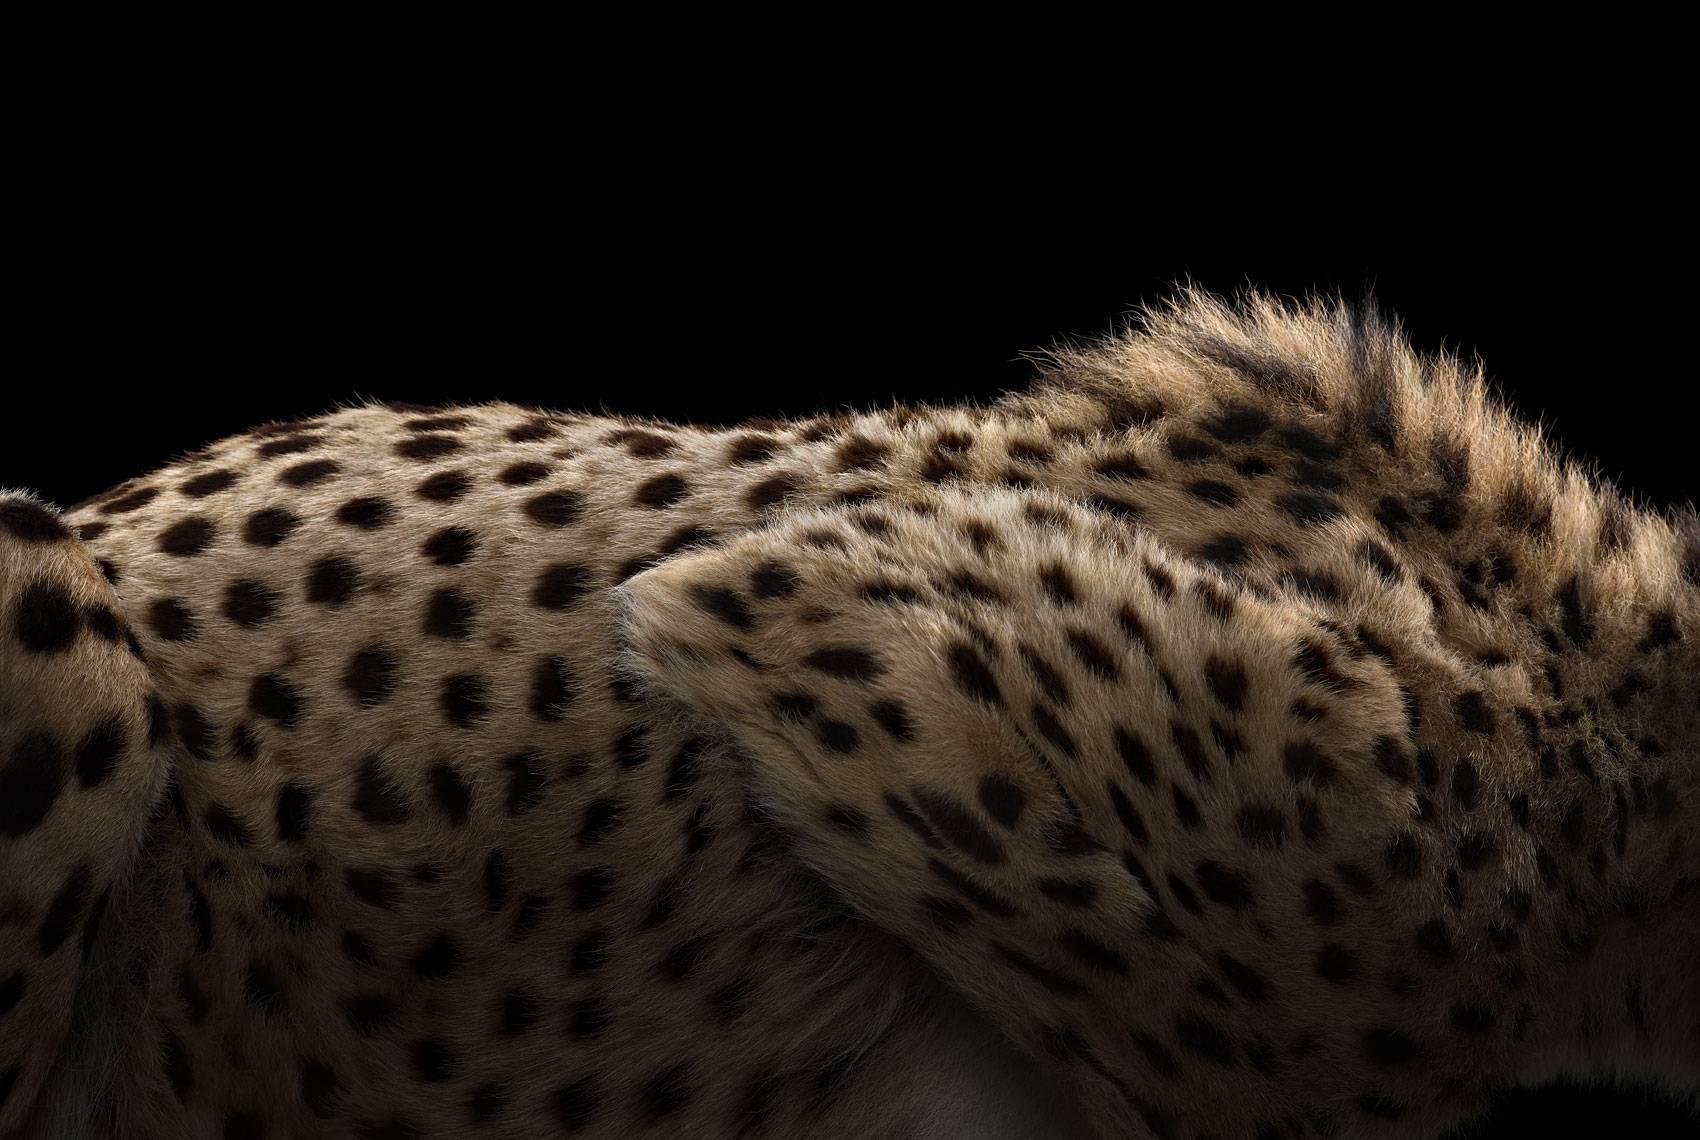 Brad Wilson Color Photograph - Cheetah #5, Los Angeles, CA, 2016